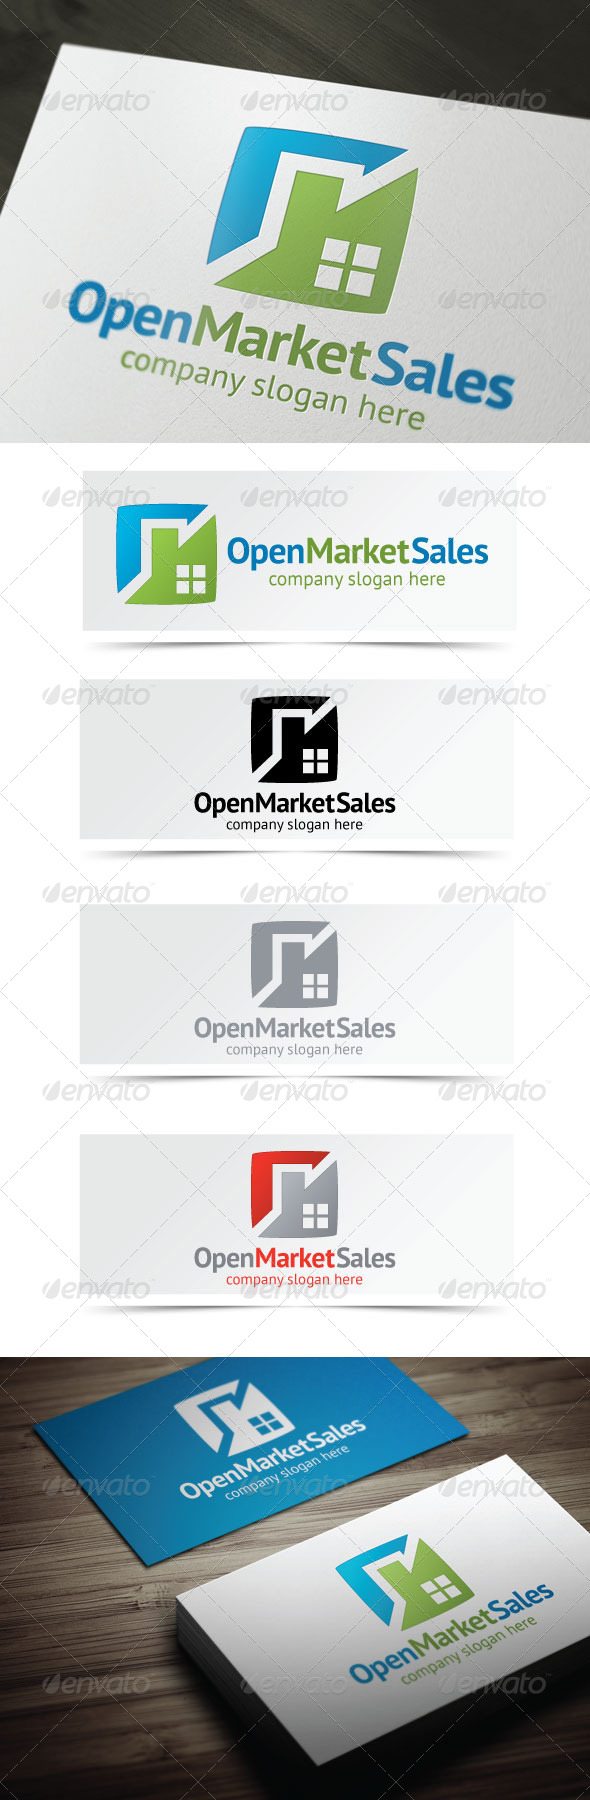 Open Market Sales